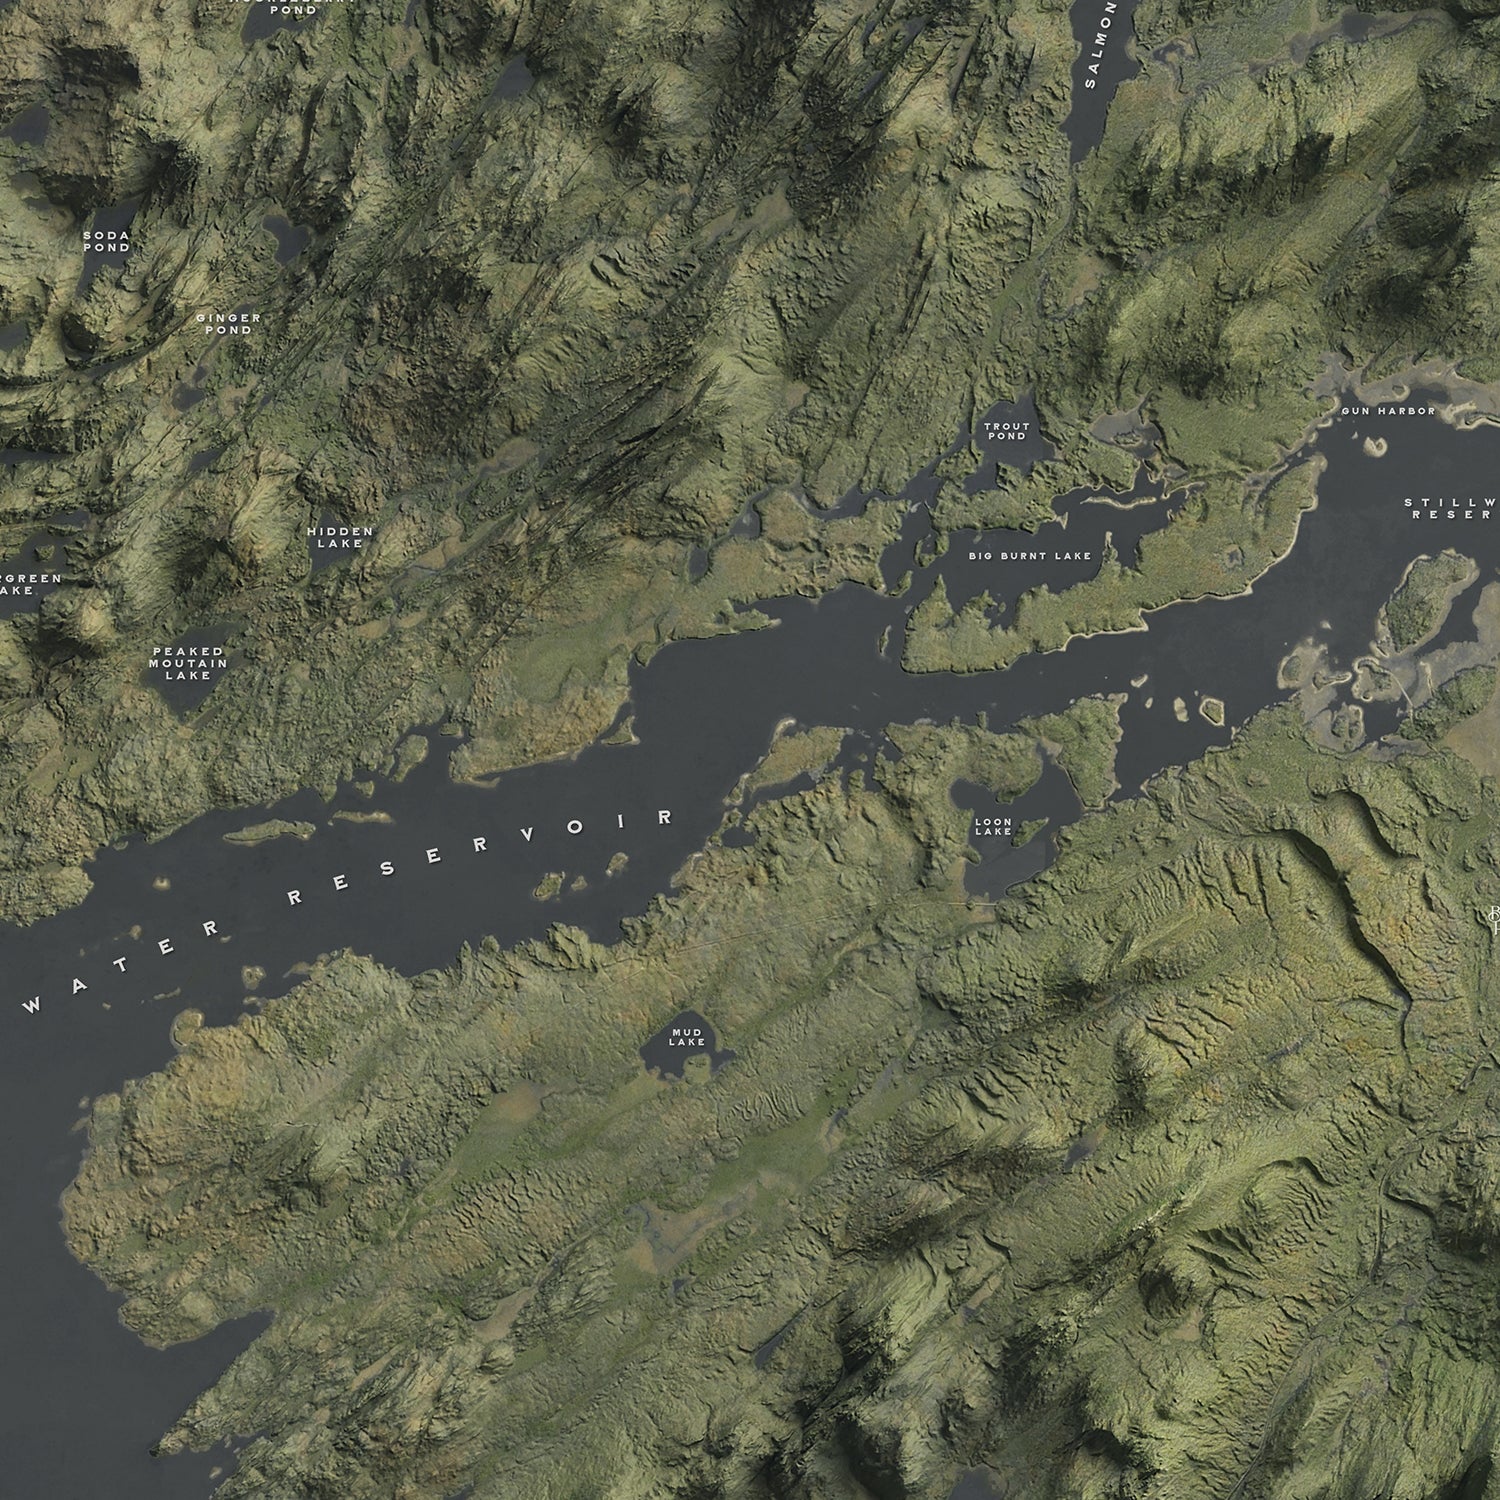 Stillwater Reservoir Map - The East of Nowhere World Atlas